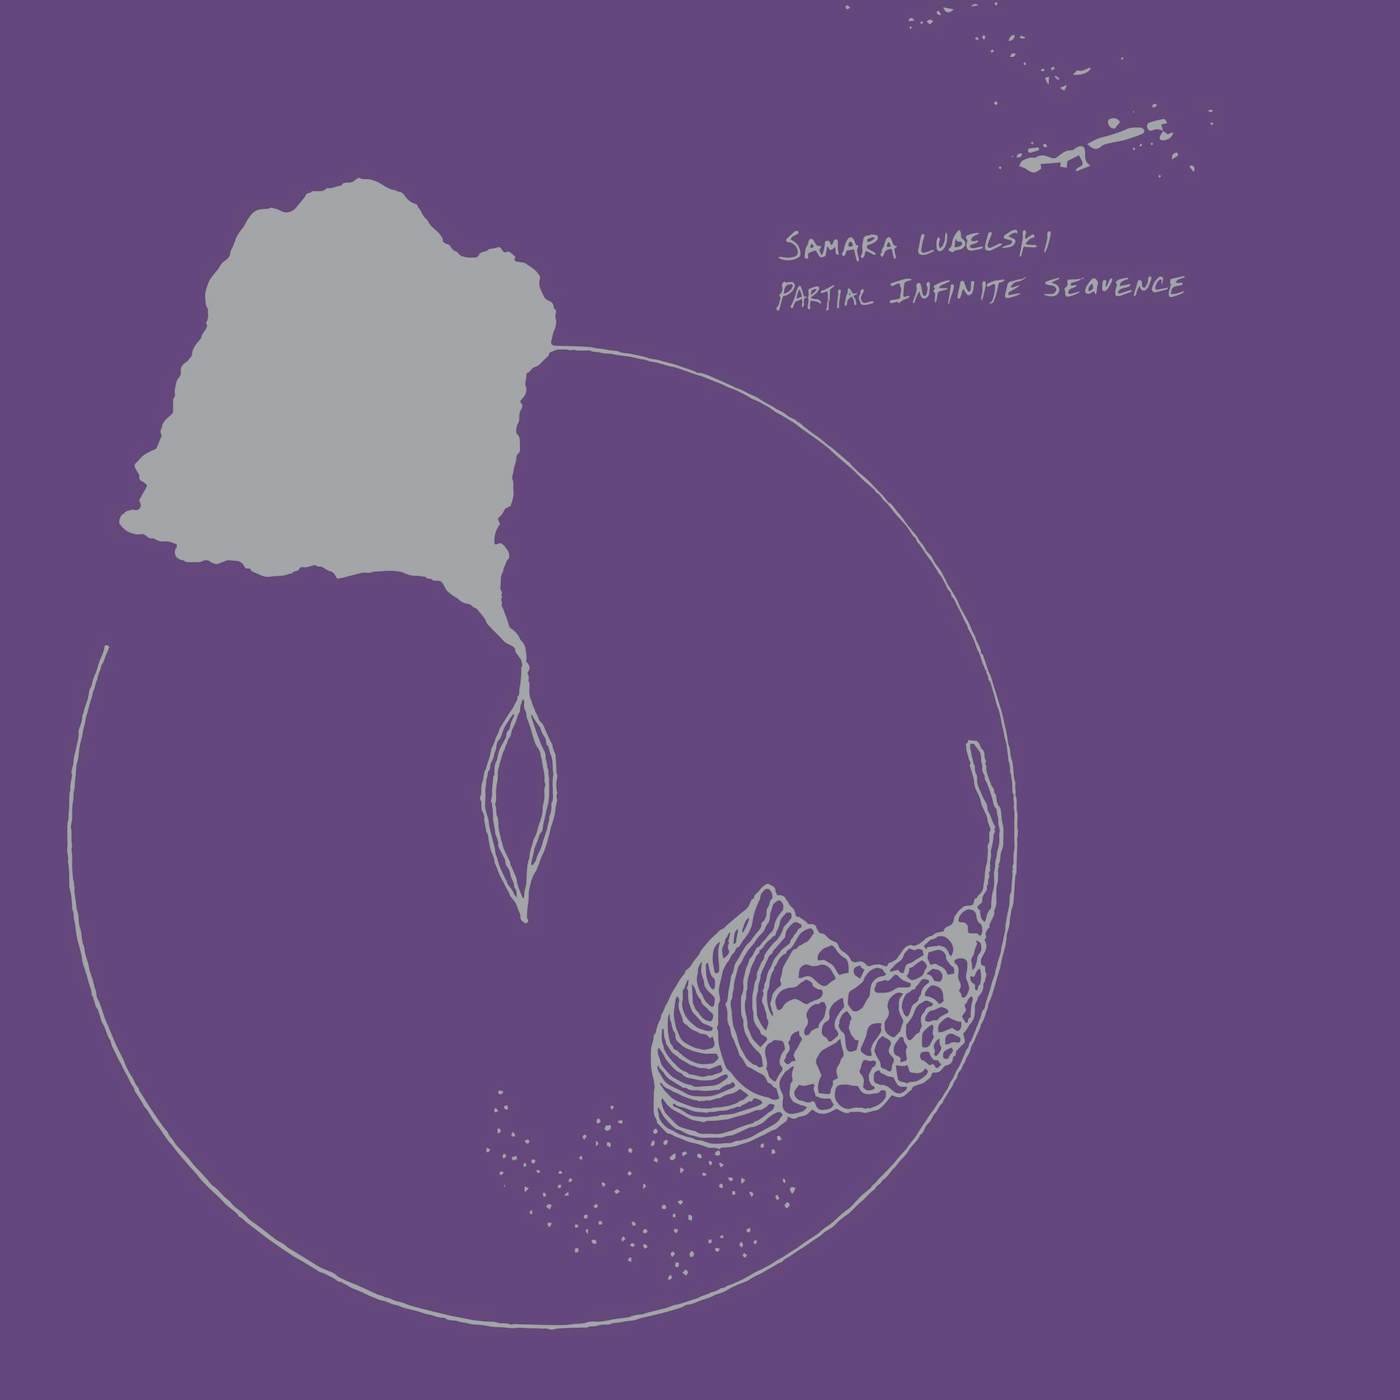 Samara Lubelski Partial Infinite Sequence CD